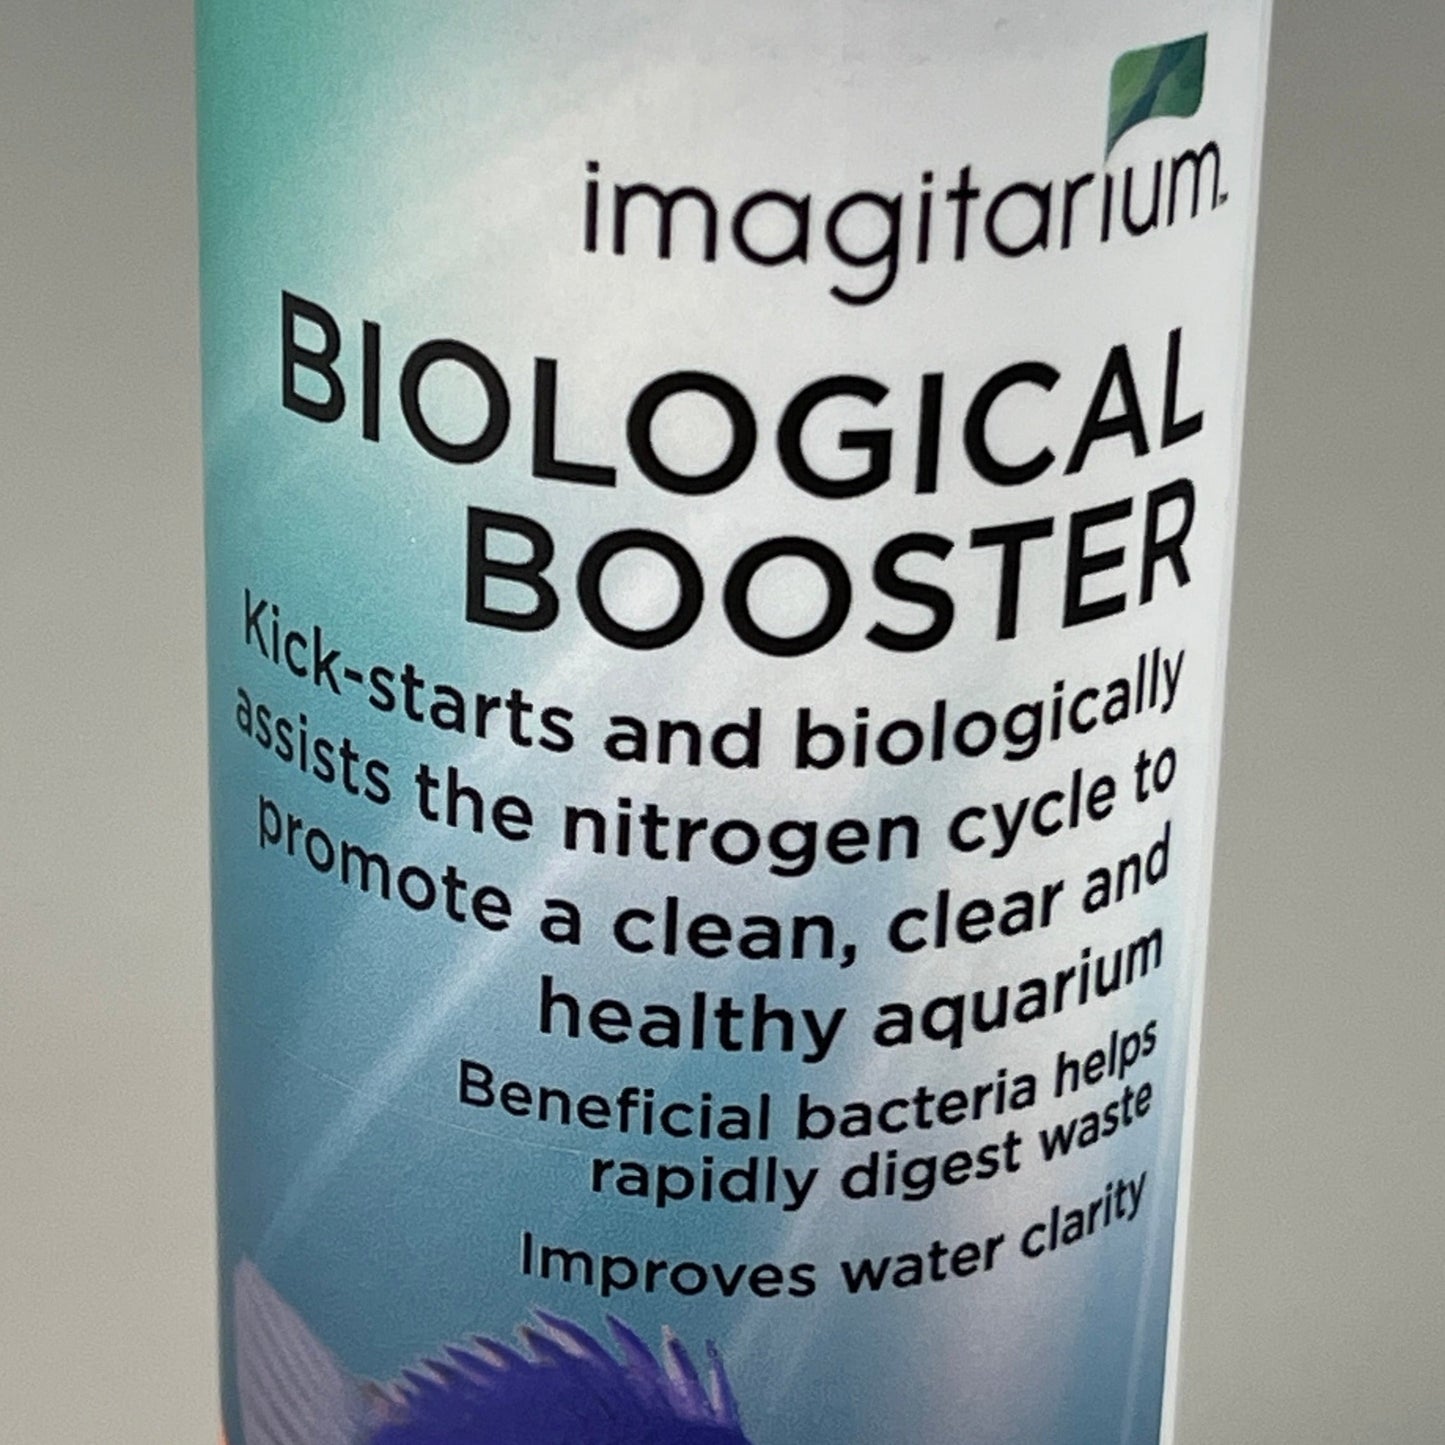 IMAGITARIUM 19PK Biological Booster Kick-Starts & Assist Nitrogen Cycle 4 oz Best By 5/24 (New)